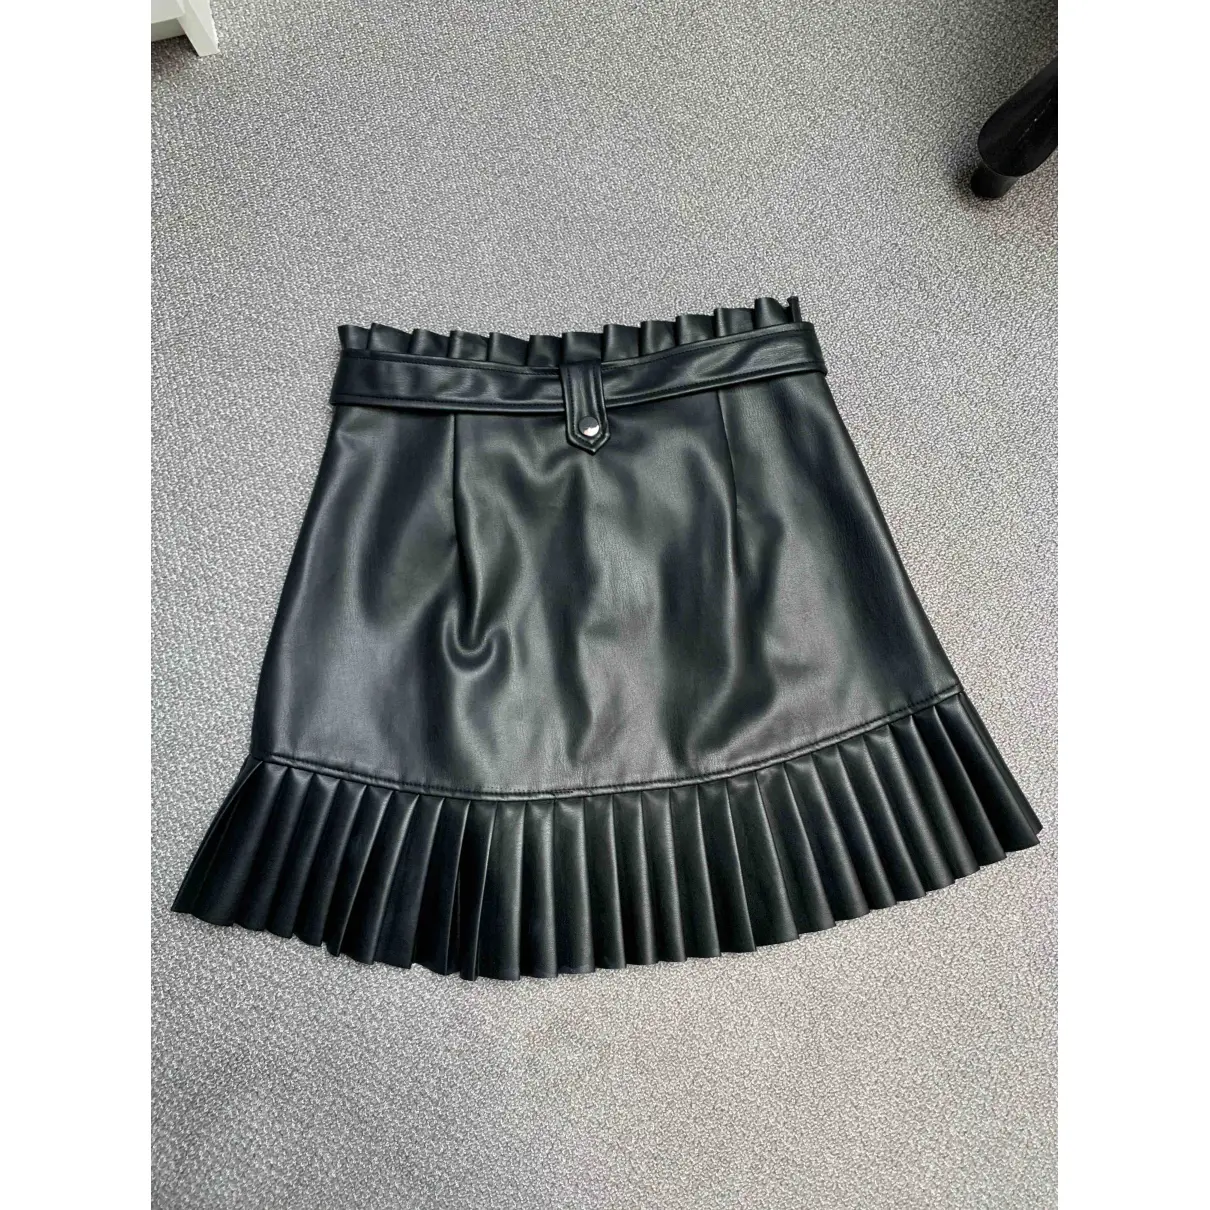 Buy Zara Patent leather mini skirt online